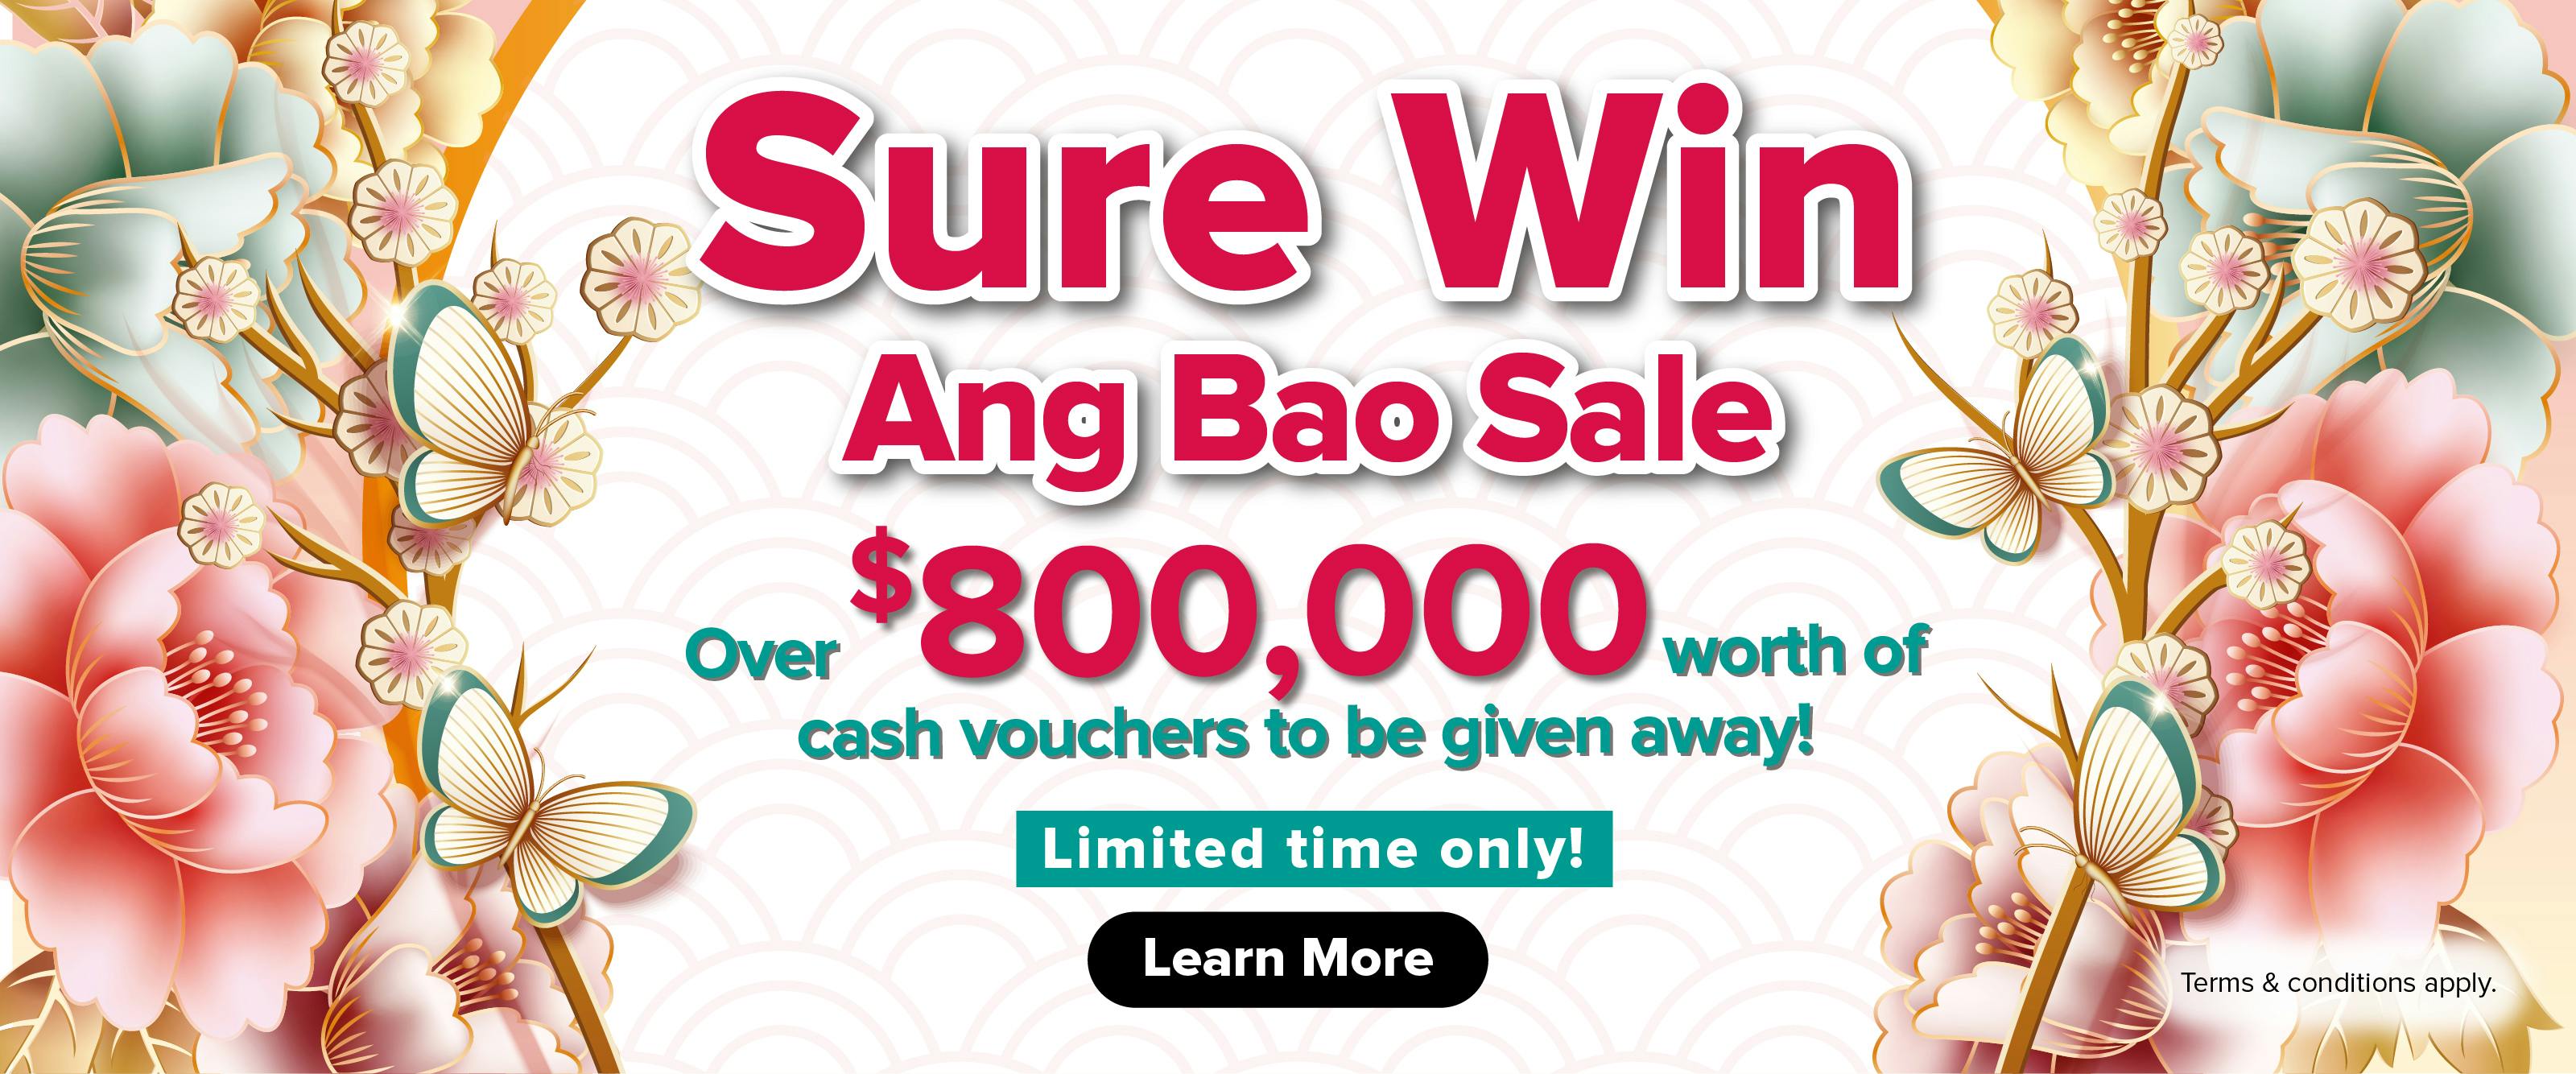 Sure Win Ang Bao Sale (6 to 19 Jan 2022) - Mobile Banner